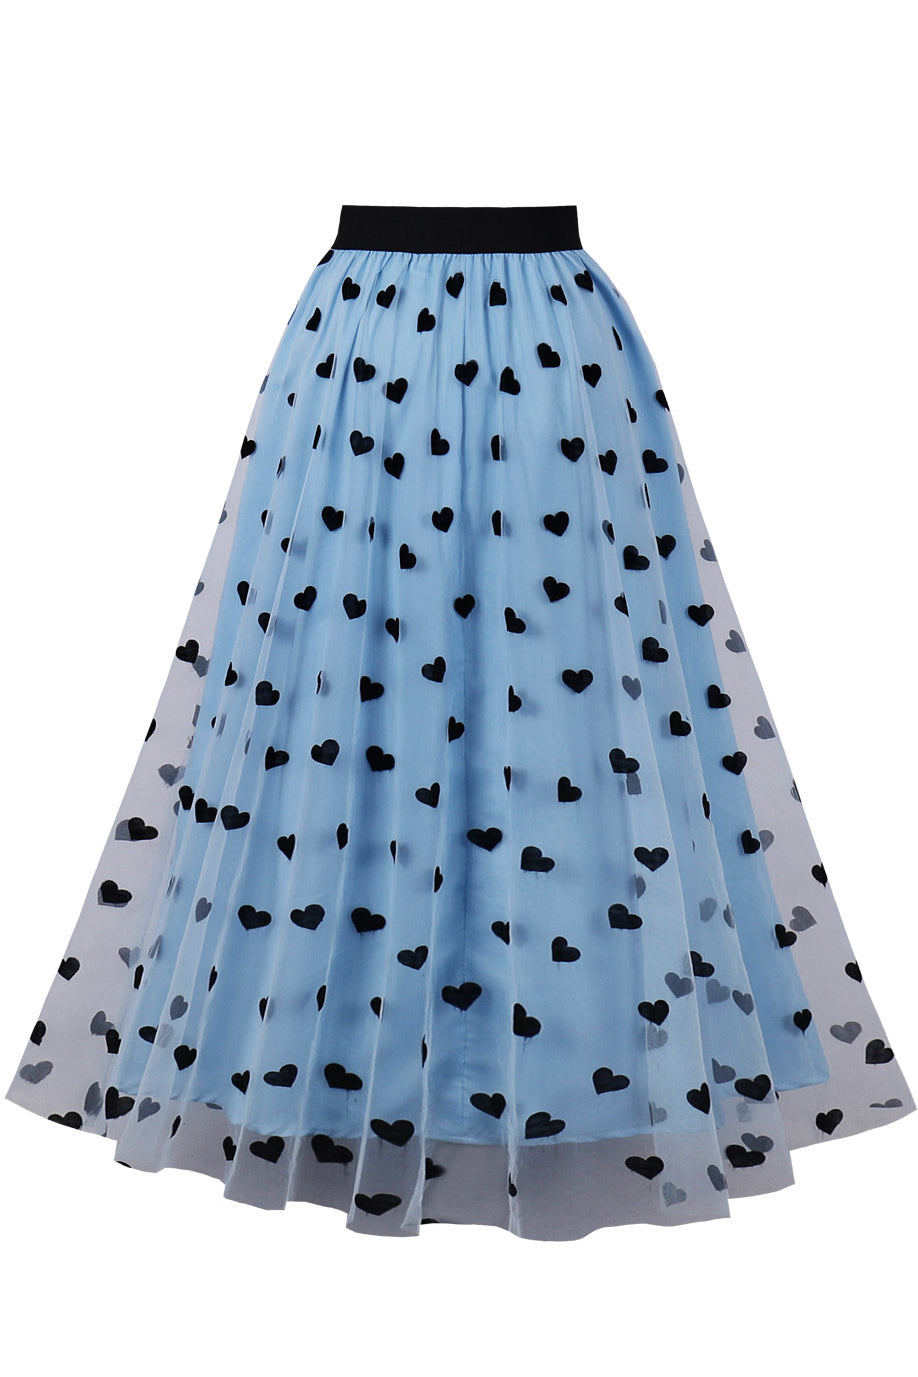 Sky Blue Heart Prints A-line Skirt